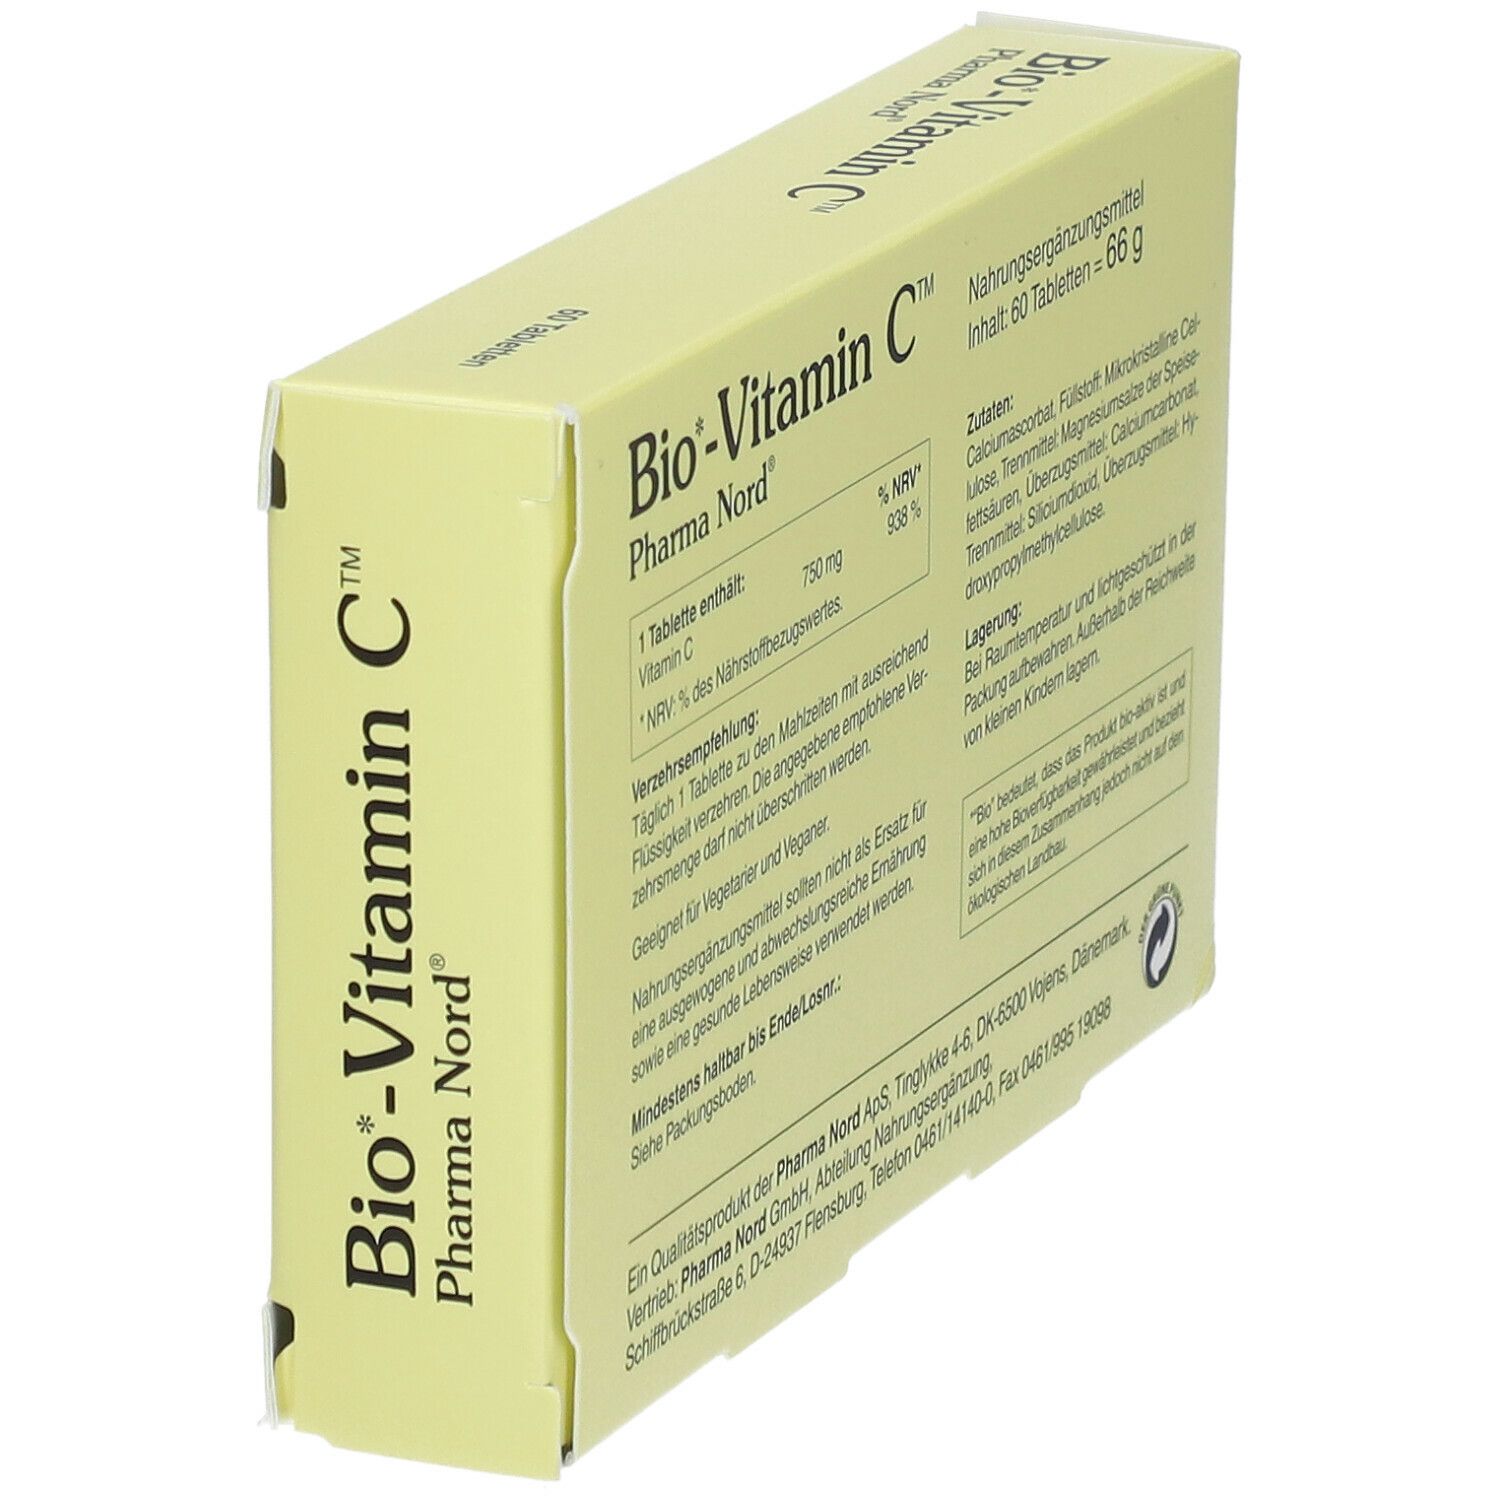 Bio®-Vitamin C Pharma Nord